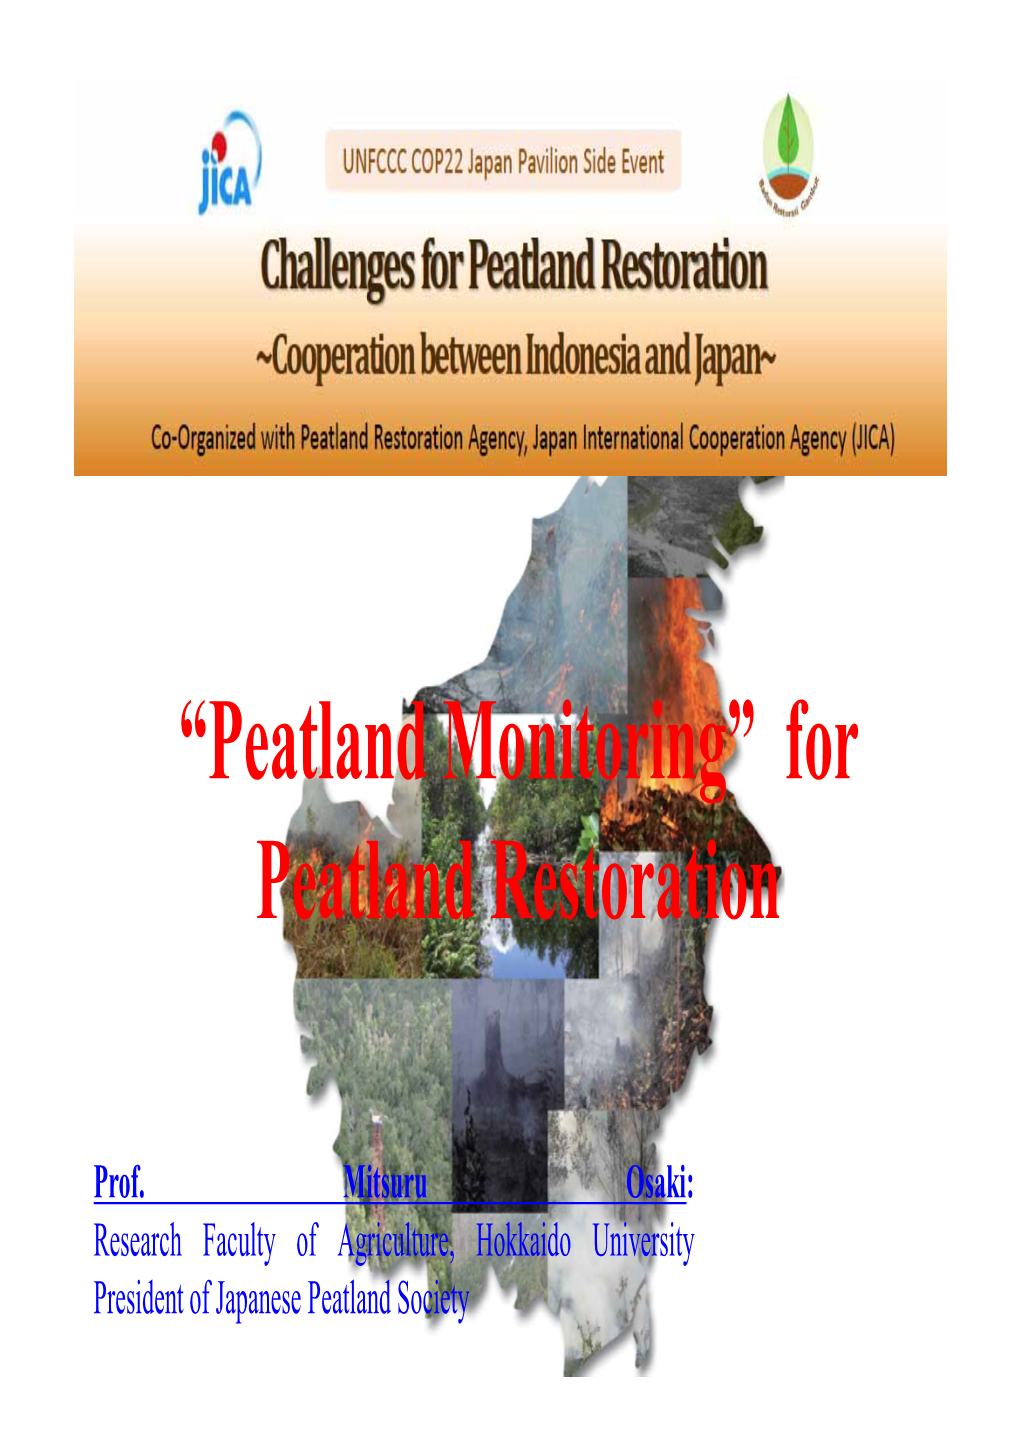 For Peatland Restoration